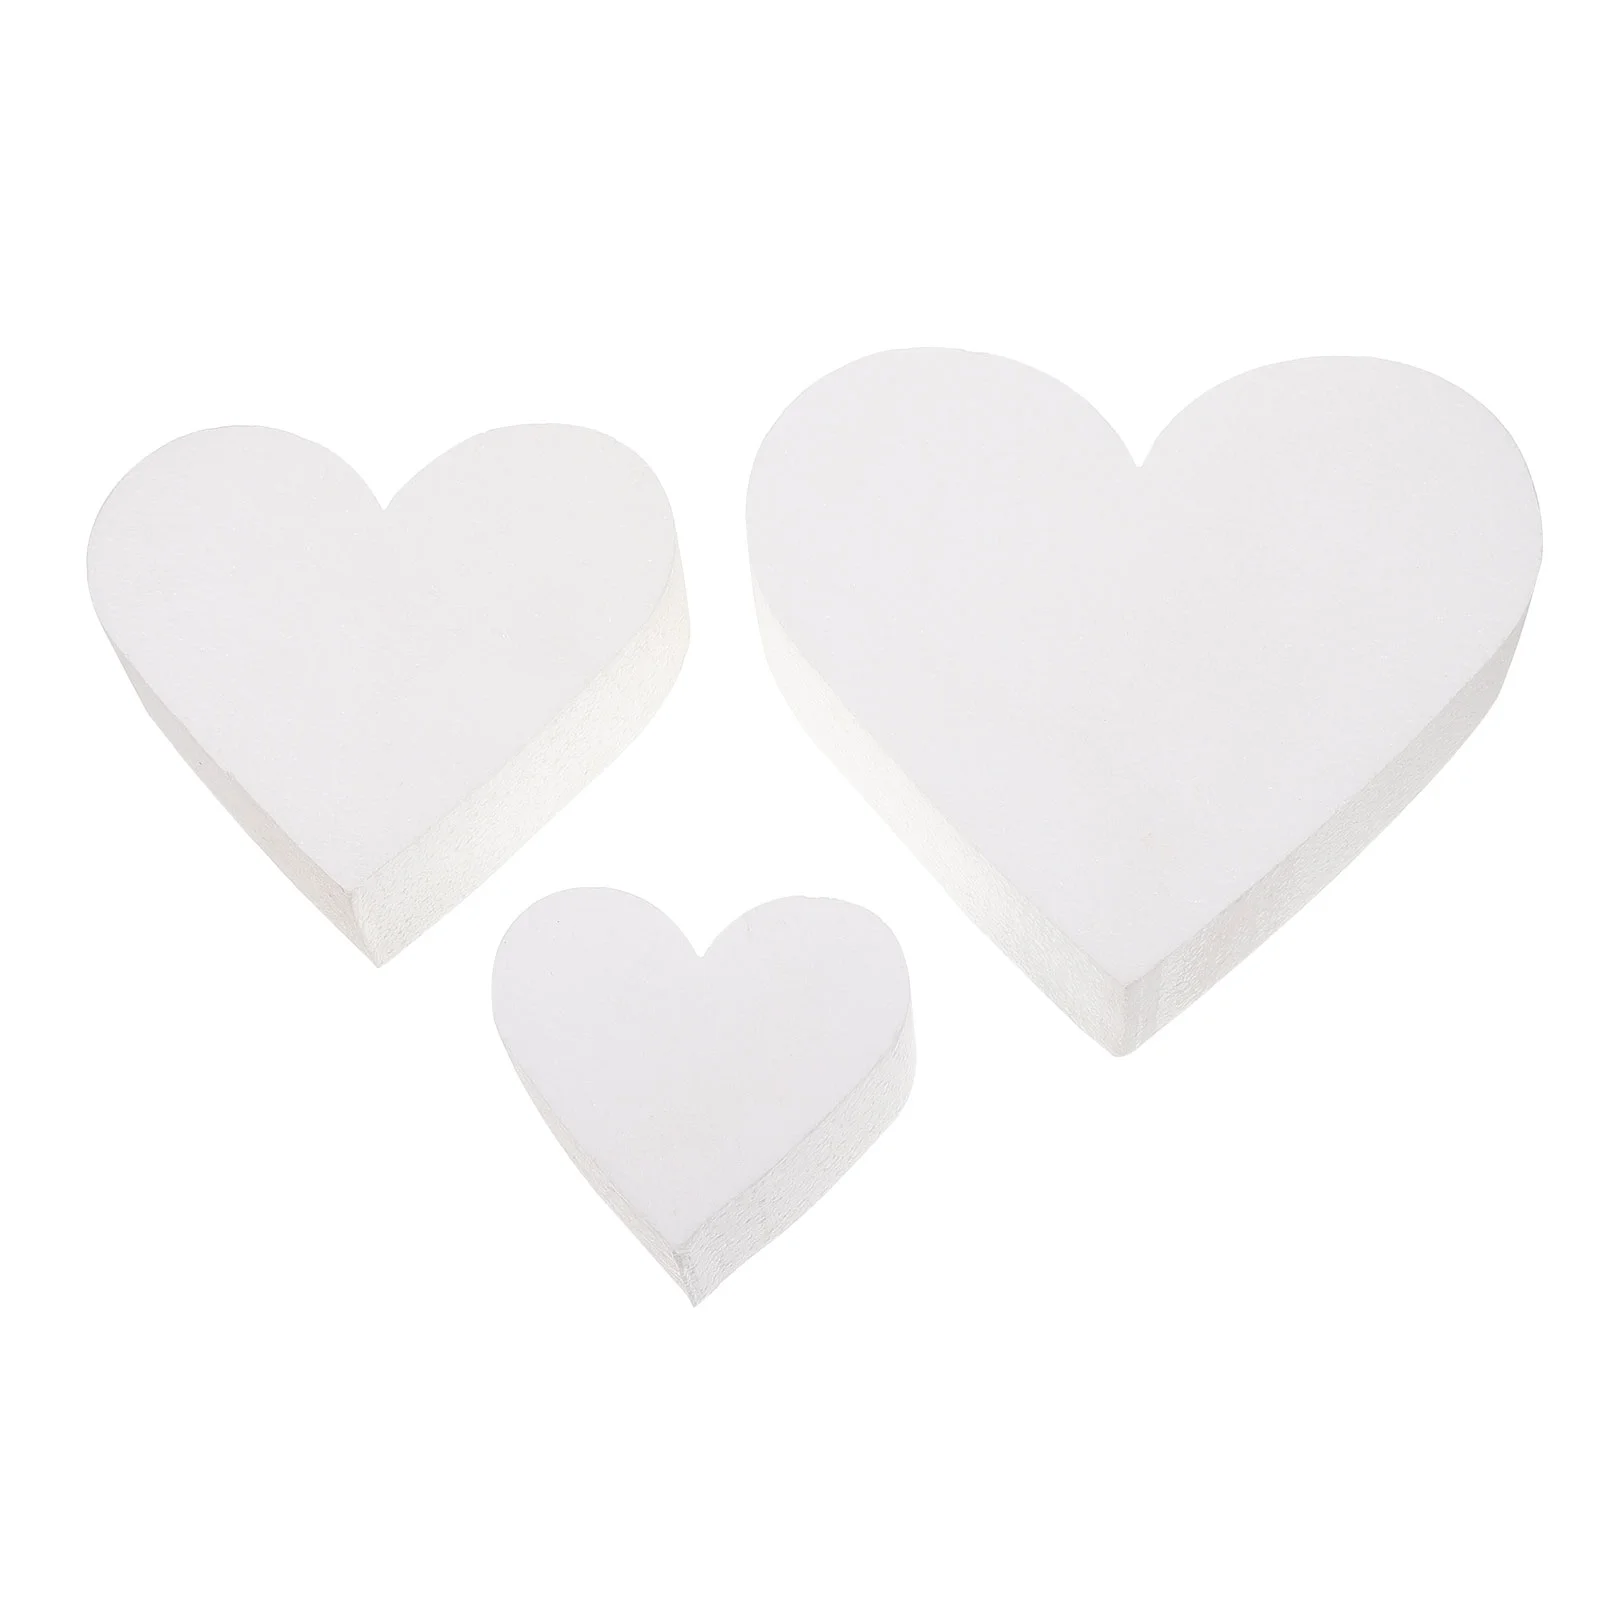 Купи Cake Dummy Styrofoam Heart Dummies Polystyrene Diy Model Fake Wedding Craft Practice Shaped Mould Decorating Display Circles за 187 рублей в магазине AliExpress